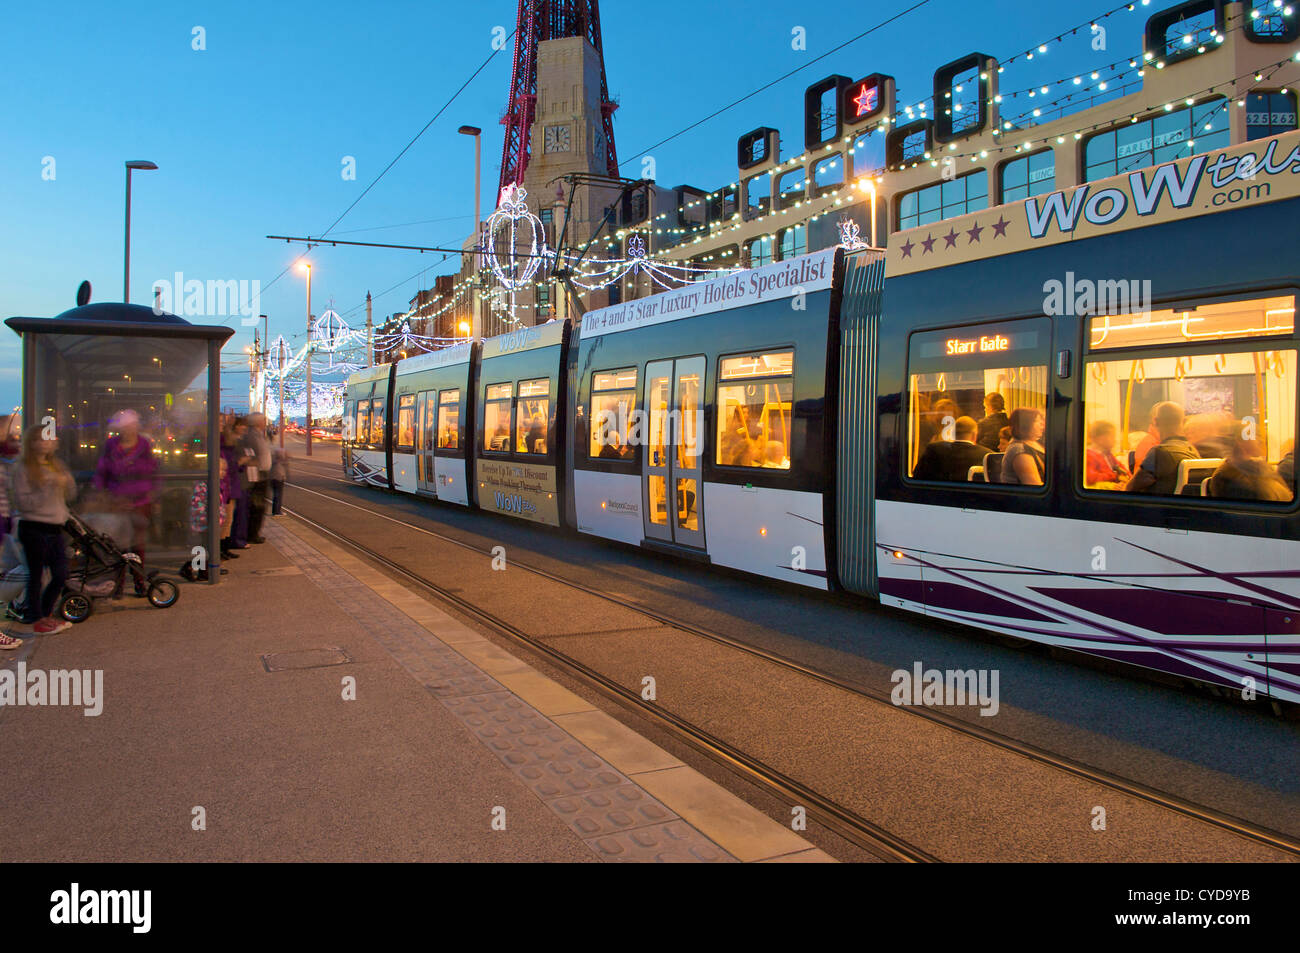 Blackpool Straßenbahn während der jährlichen Illuminationen Stockfoto